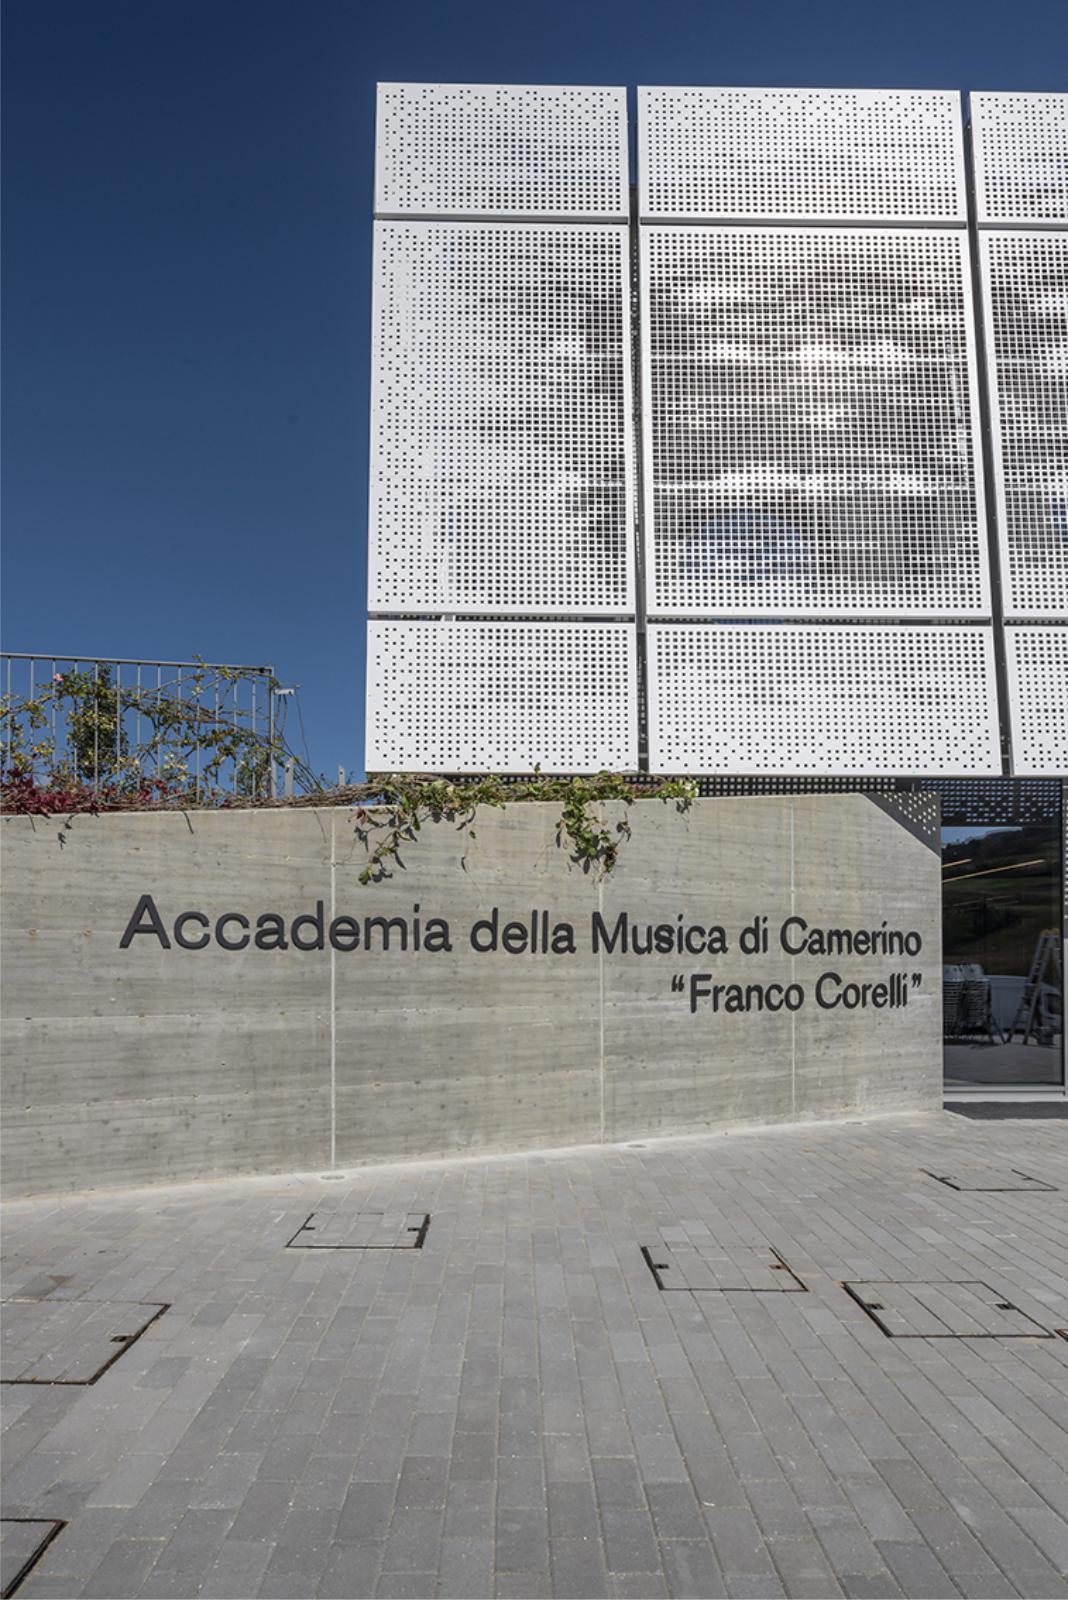 Camerino Academy of Music